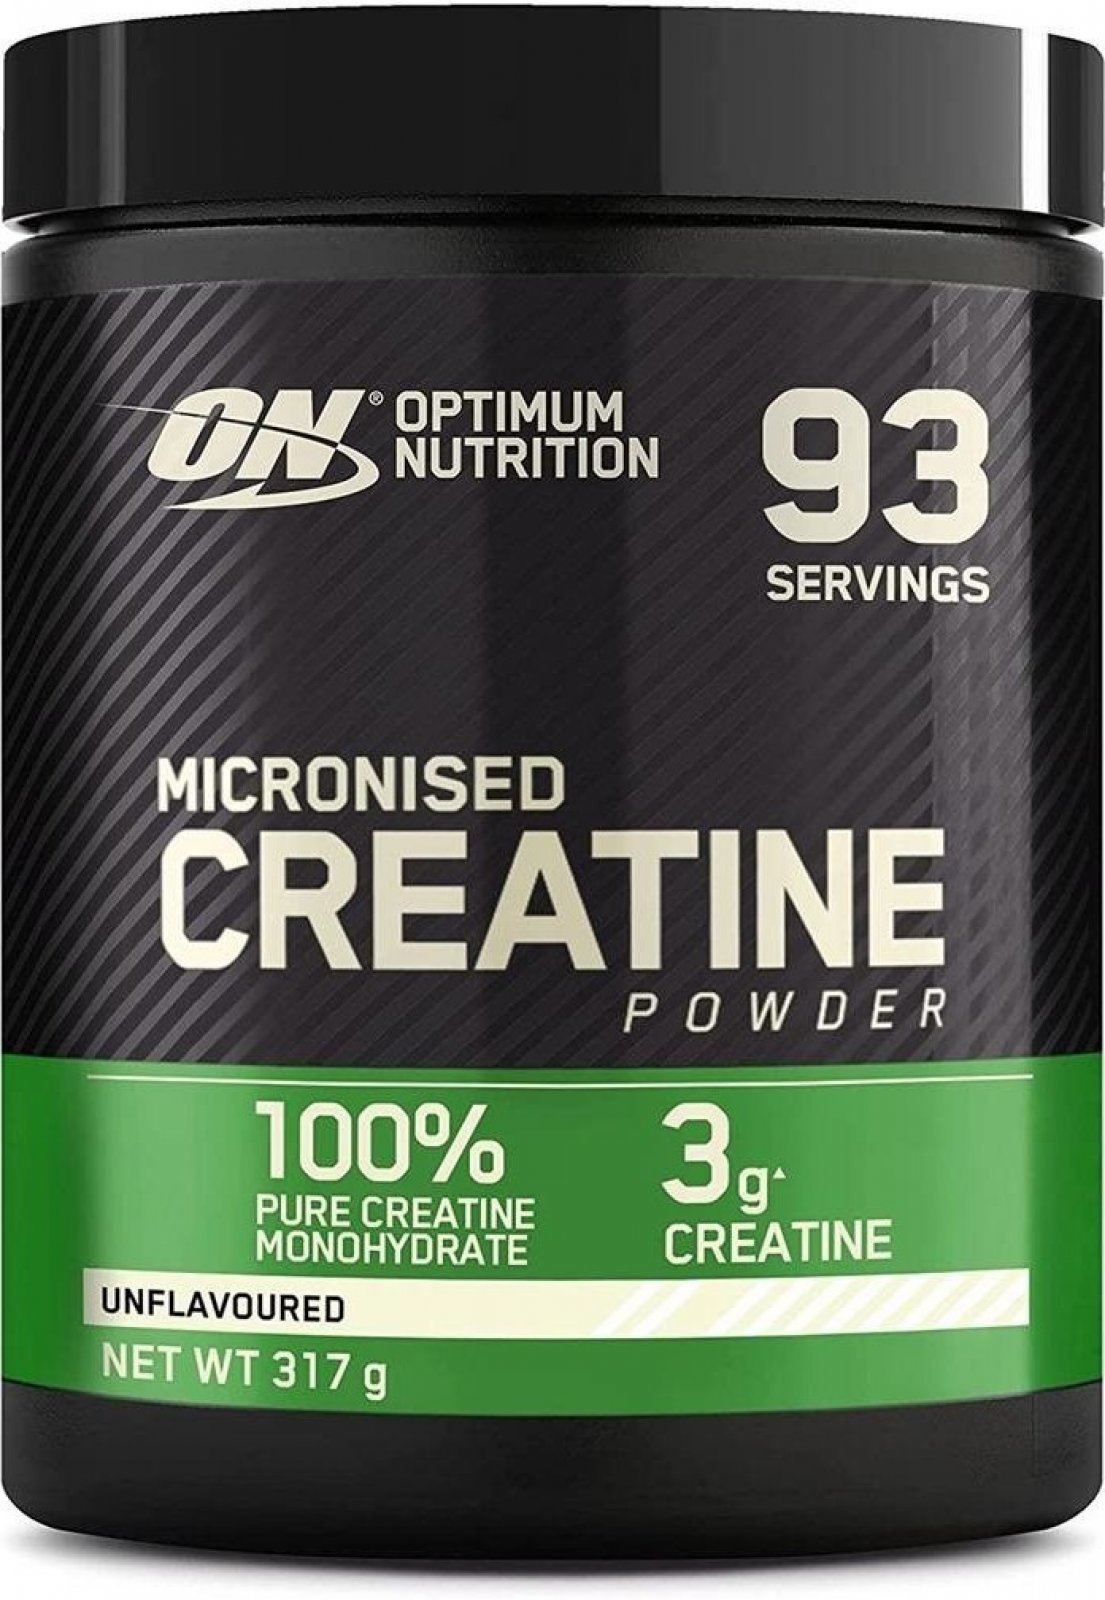 Optimum Nutrition Creatine Powder 317 g - made up of 100% creatine monohydrate - $39.95